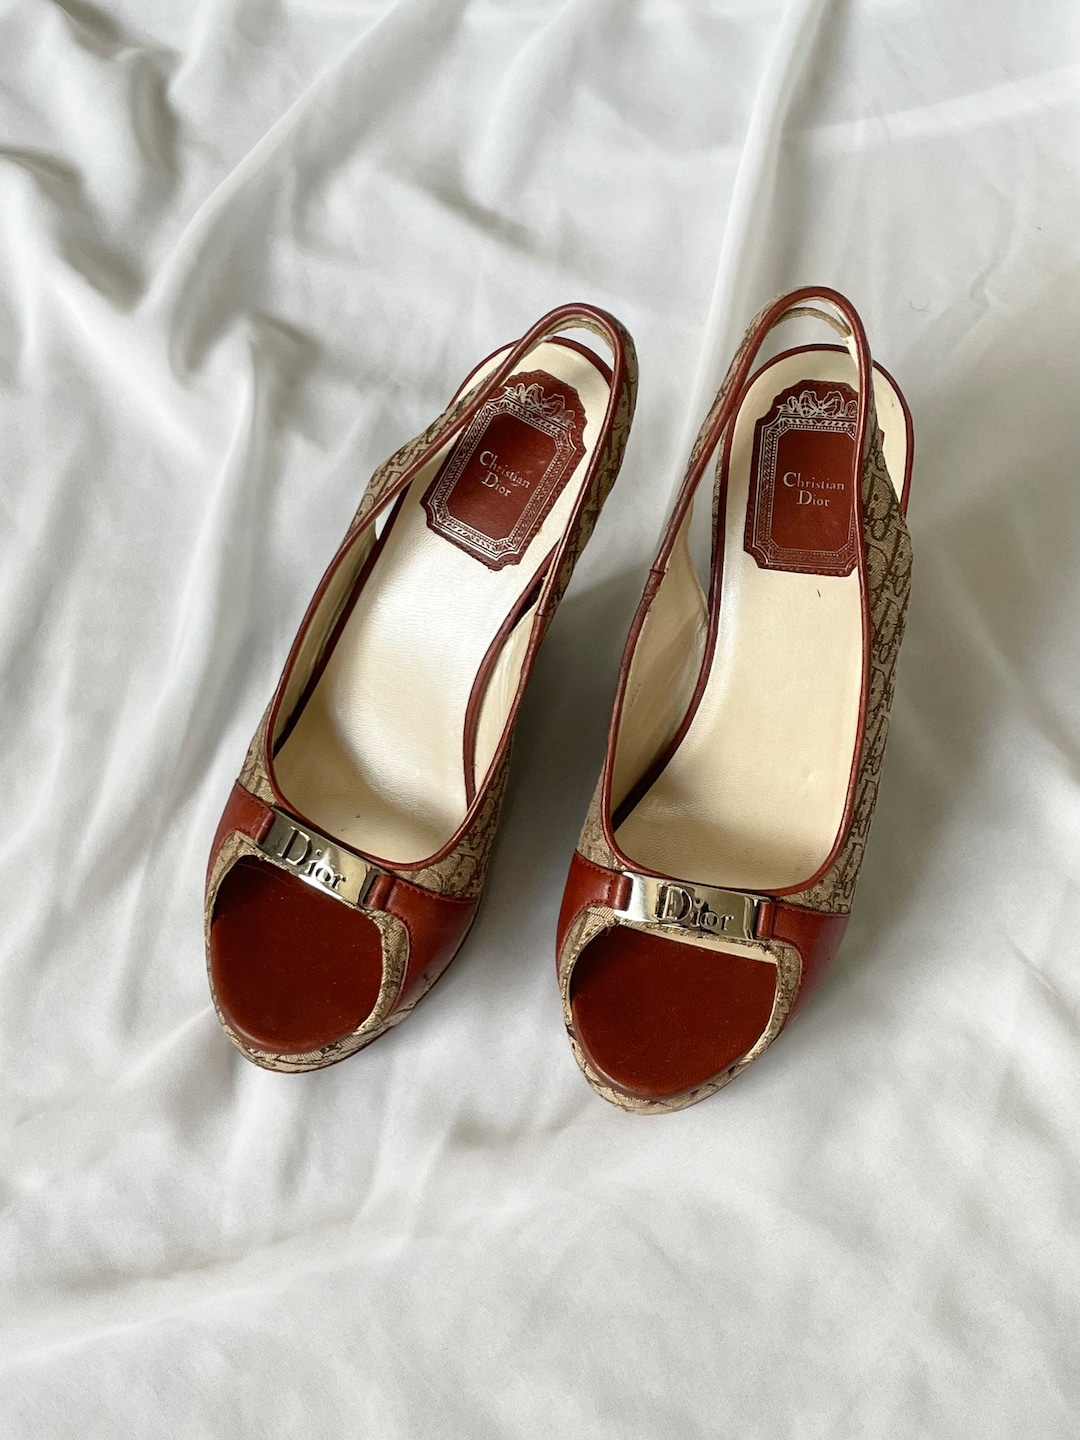 Vintage Christian Dior Monogram Platform Shoes, Size 36 EU 10216 - Etsy